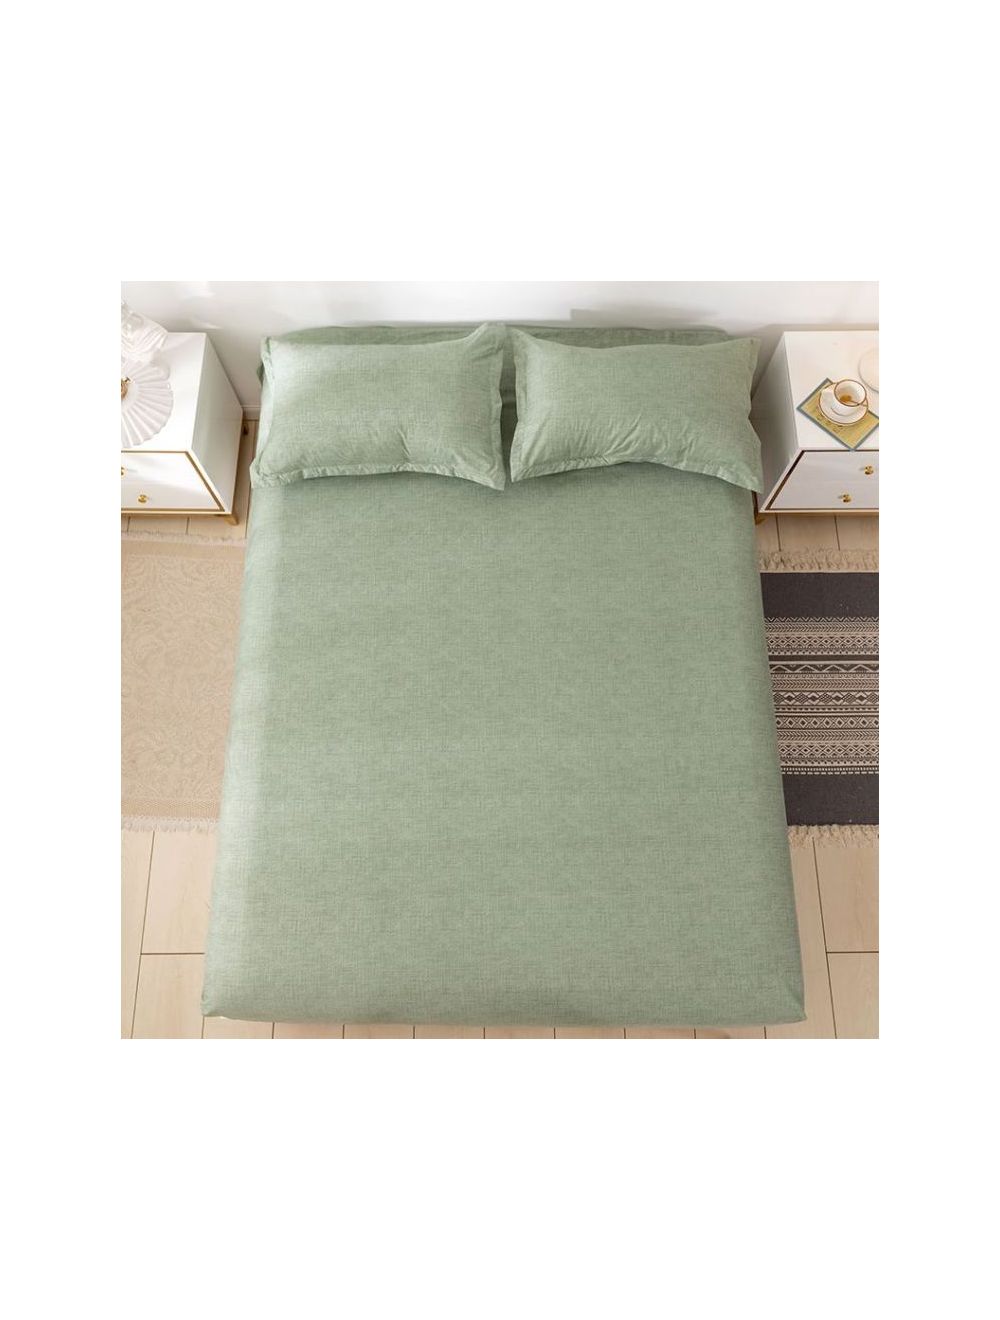 Rishahome 3 Piece Printed Bedsheet Set Queen Size Spanish Microfiber Green-SGRBS0003